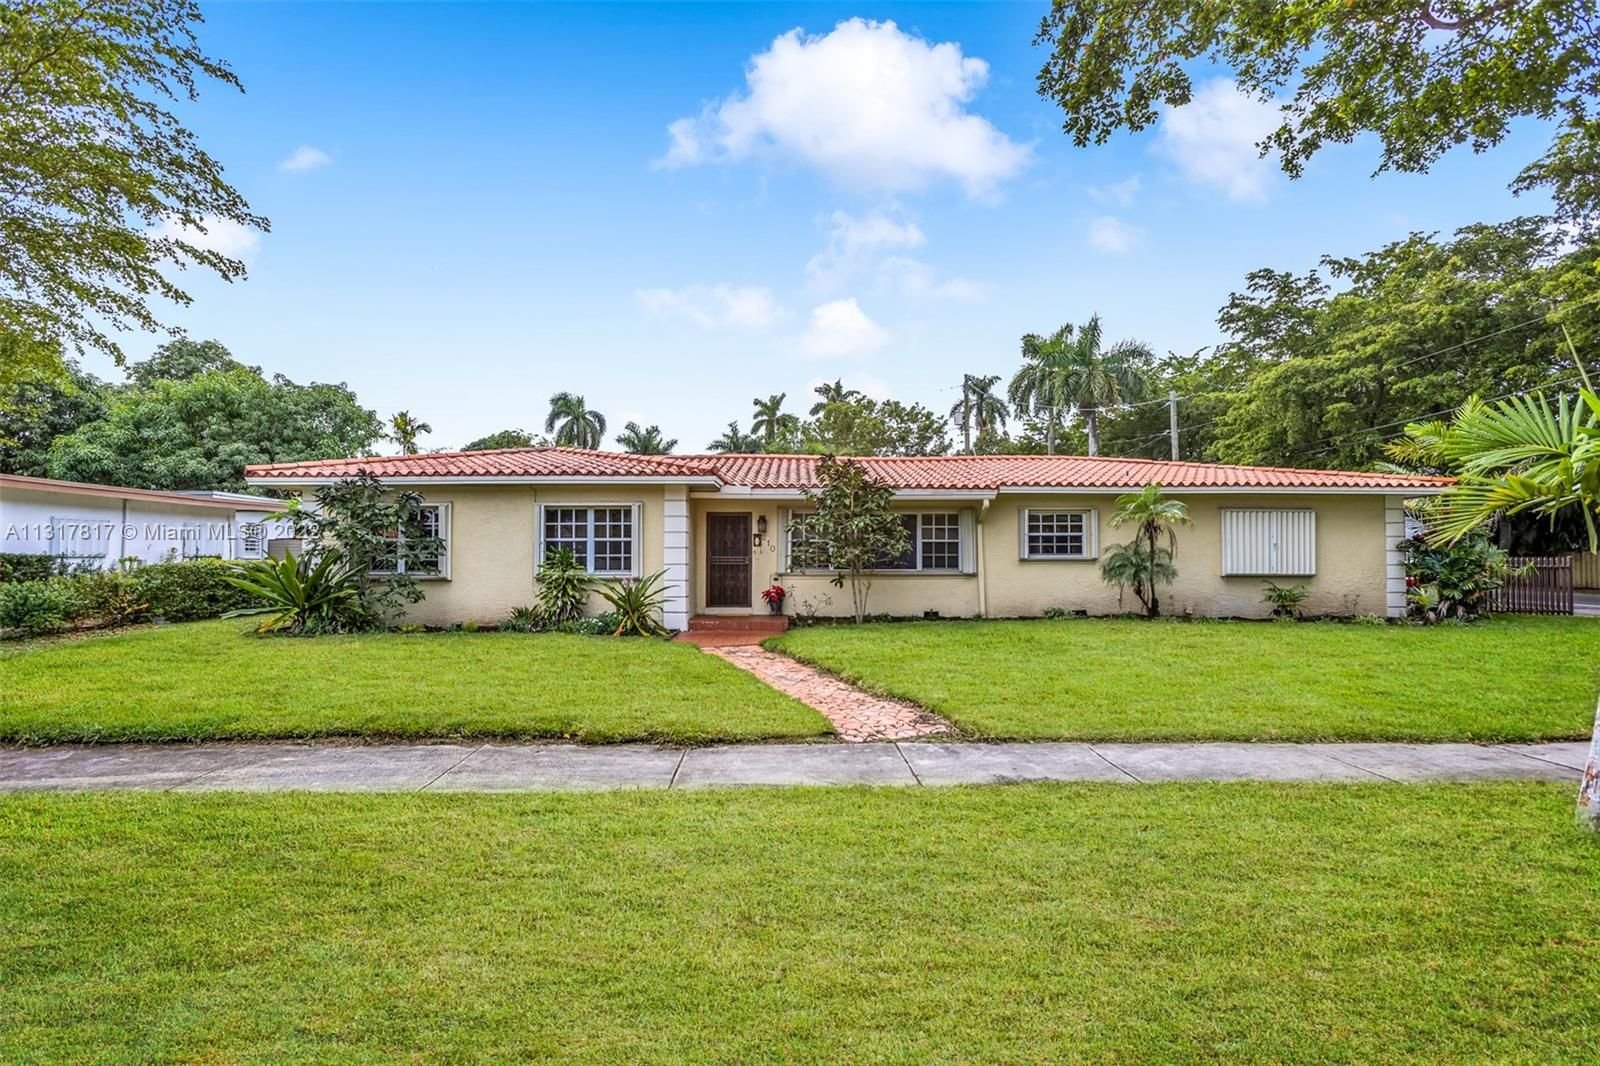 Real estate property located at 210 124th St, Miami-Dade County, North Miami, FL